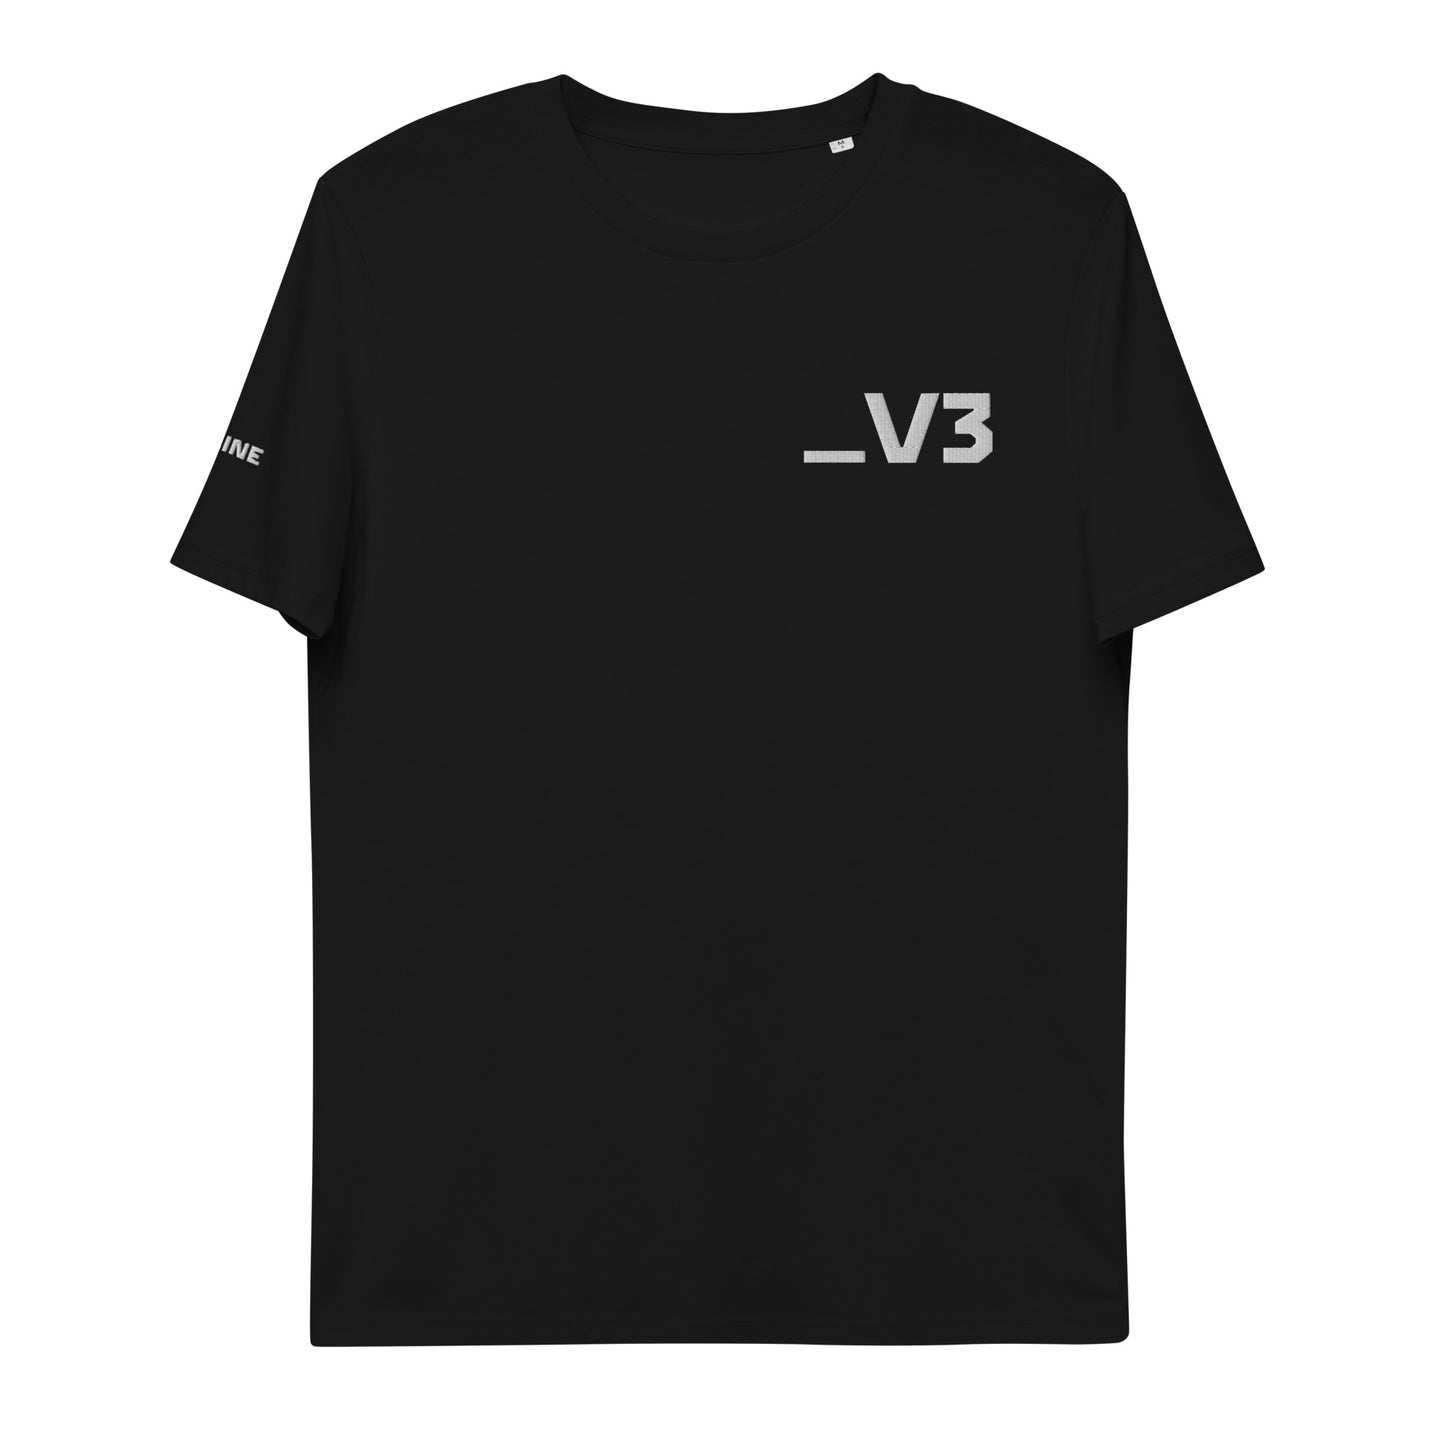 _V3 Embroidered Unisex organic cotton t-shirt